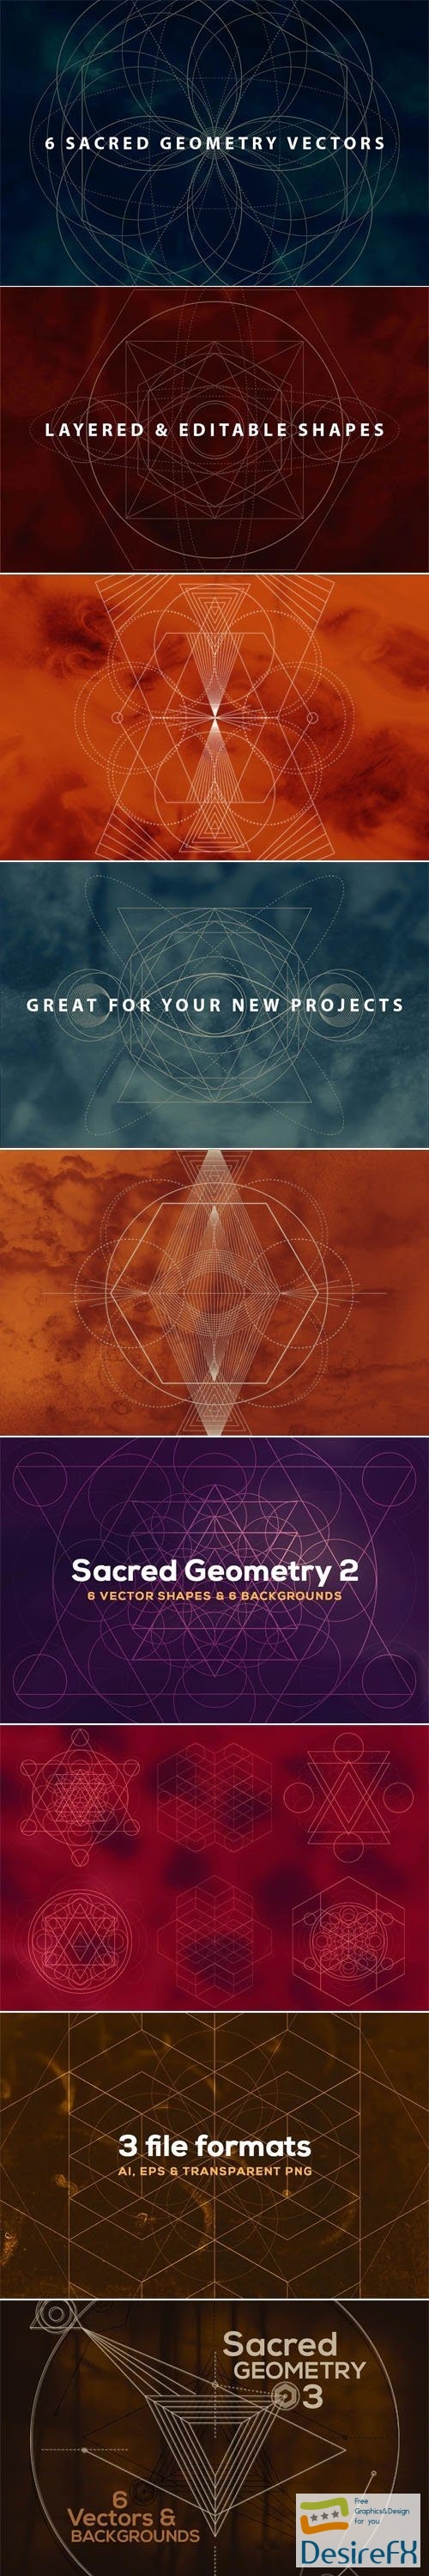 18 Sacred Geometry Vectors + Backgrounds